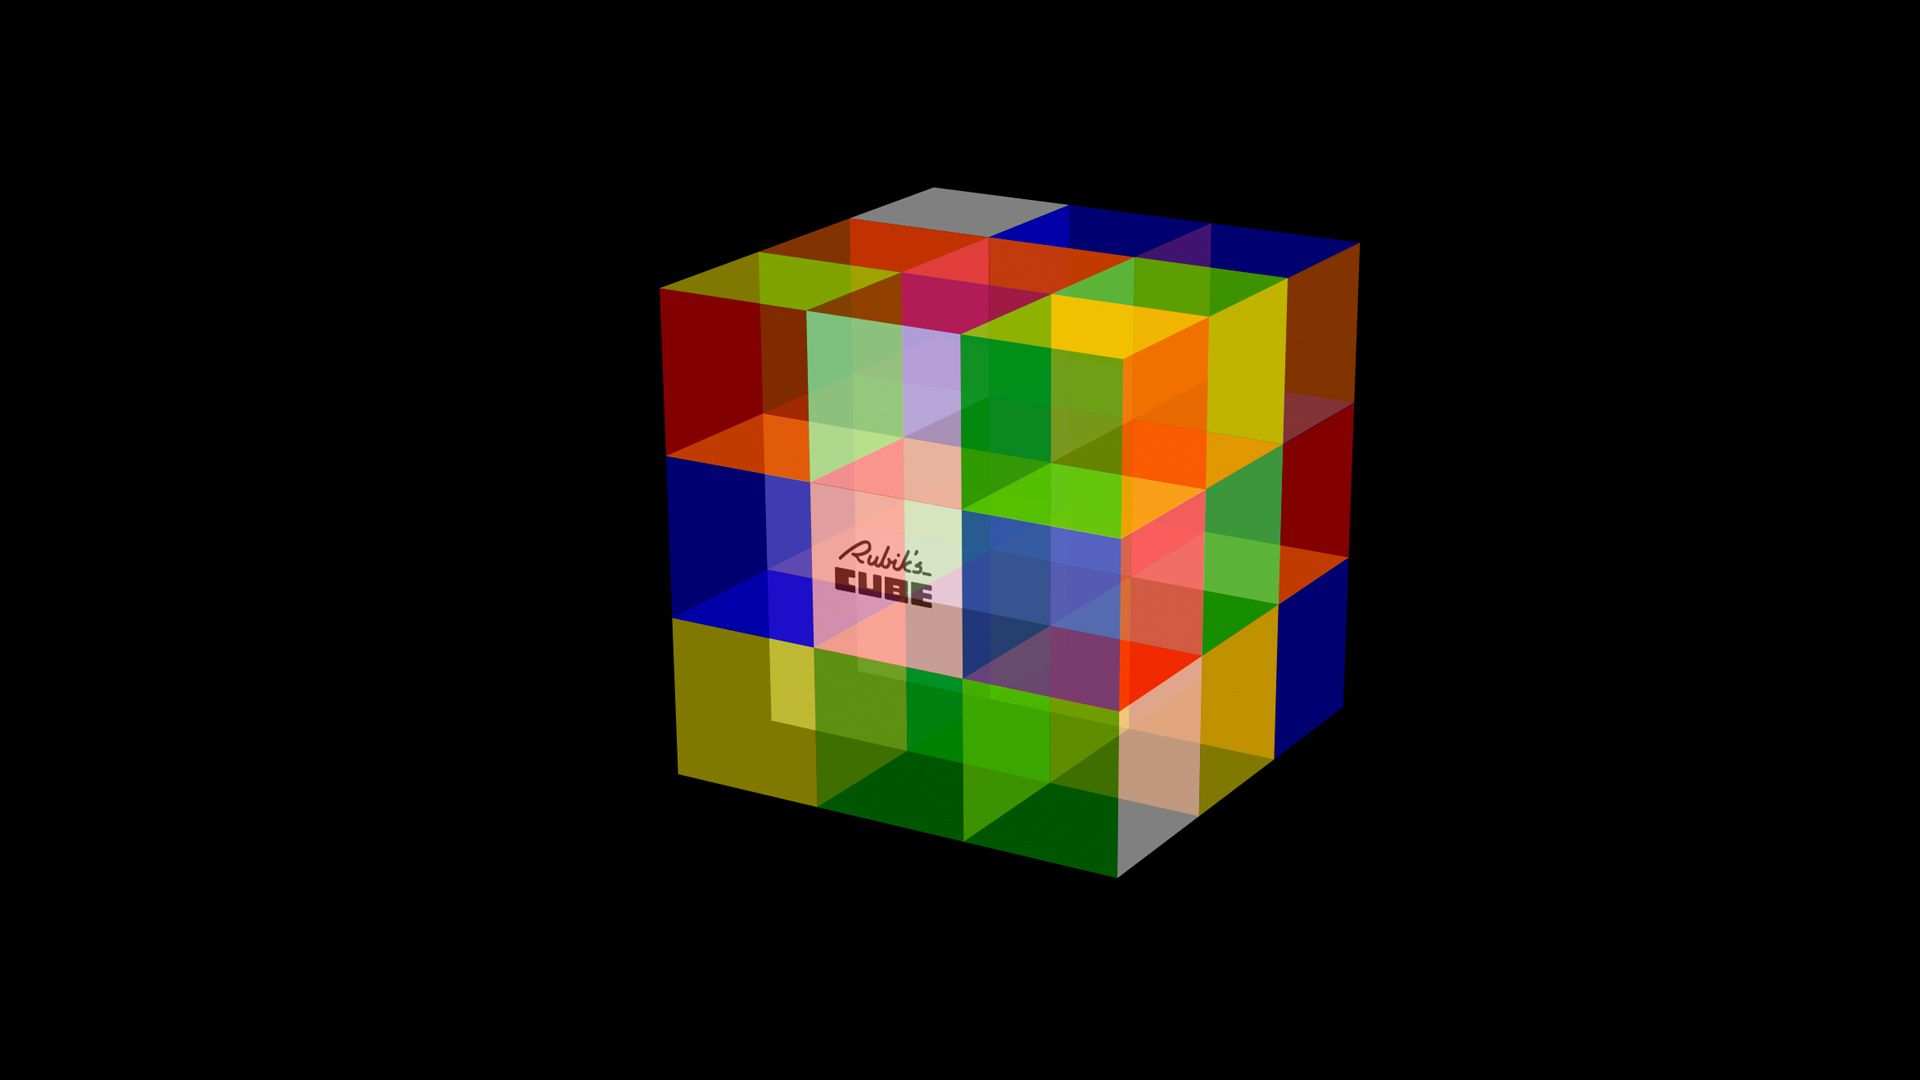 D Rubiks Cube Wallpaper Cube Desktop Wallpaper Free Hd Desktop Cube Rubiks Cube Abstract Wallpaper